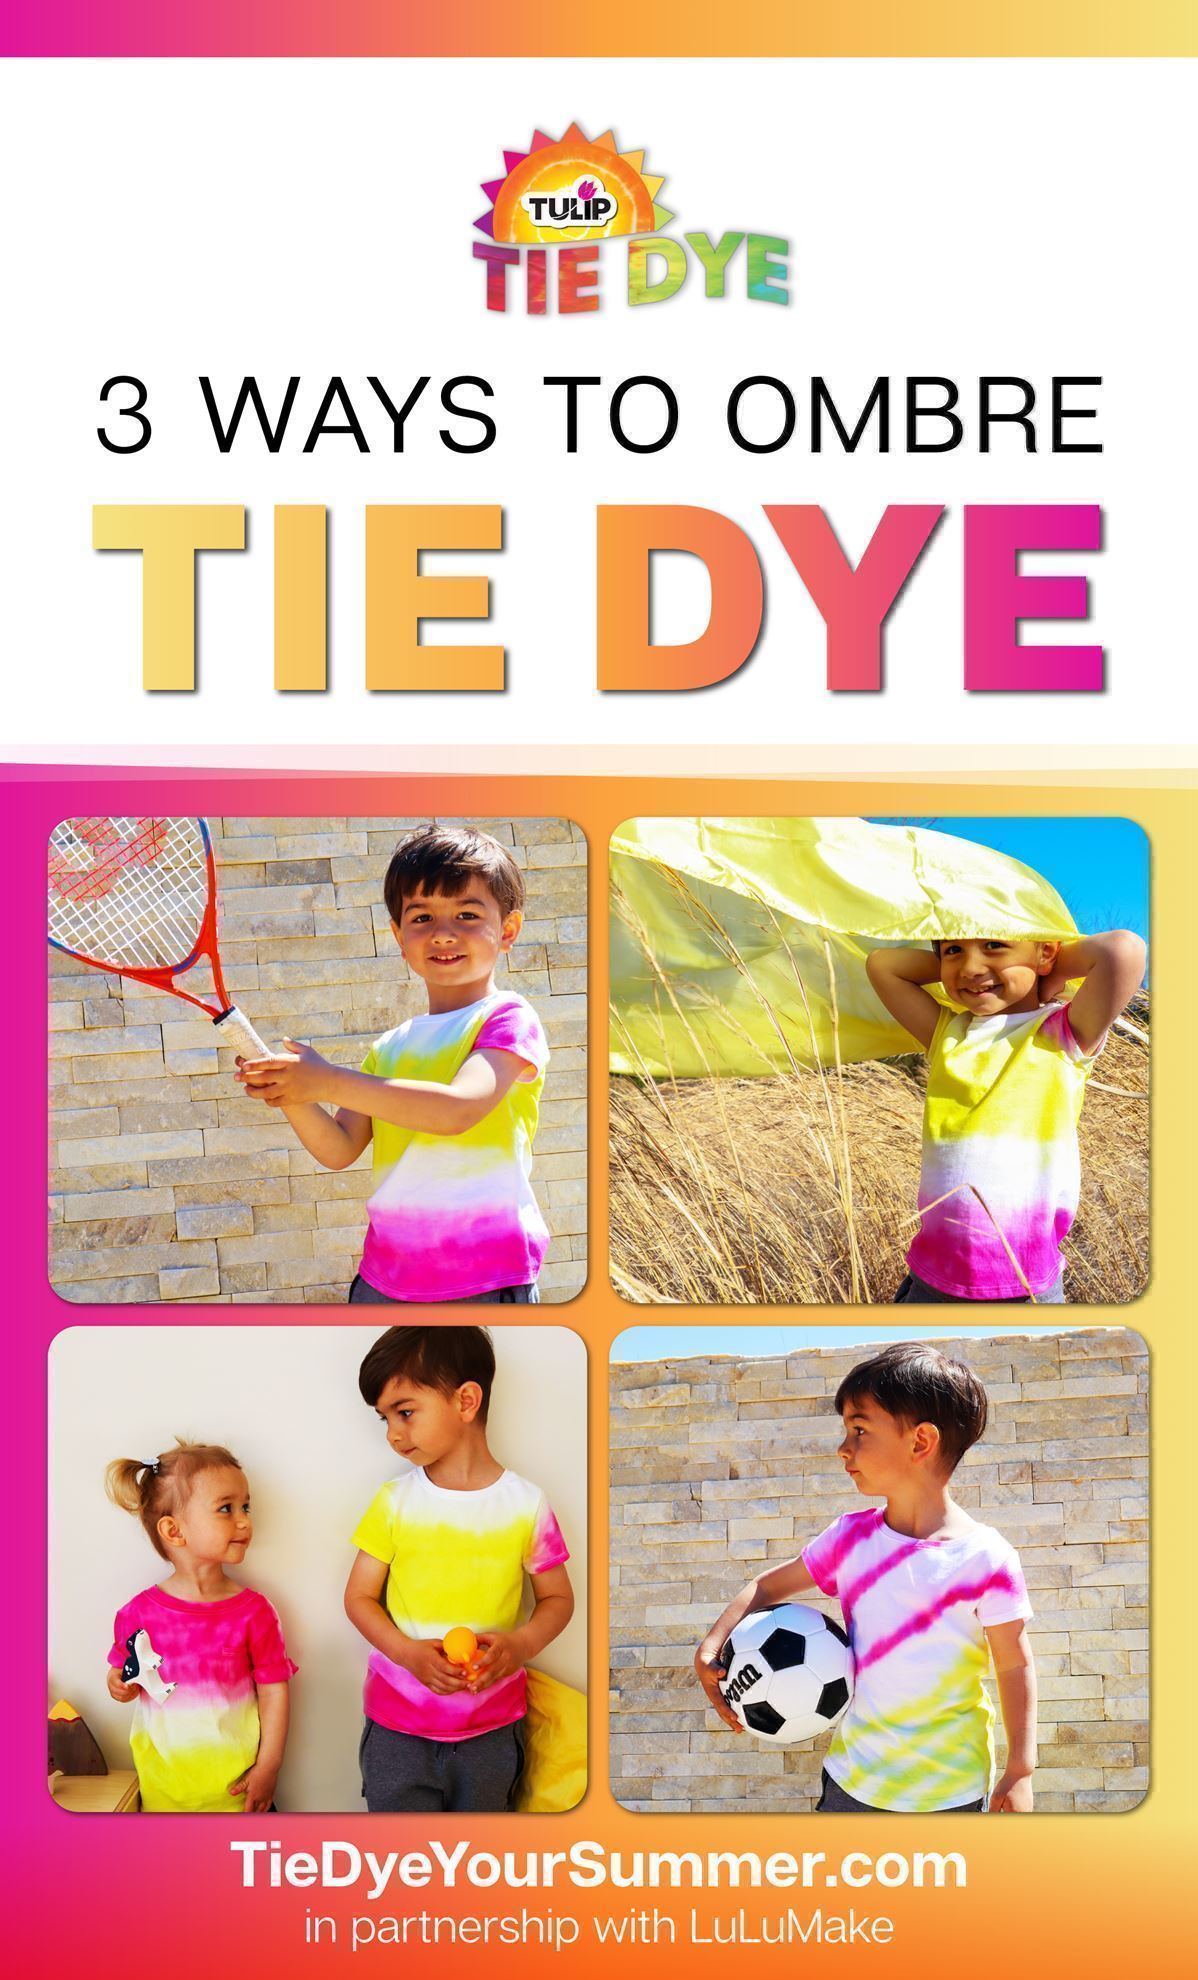 3 Ways to Ombre Tie Dye